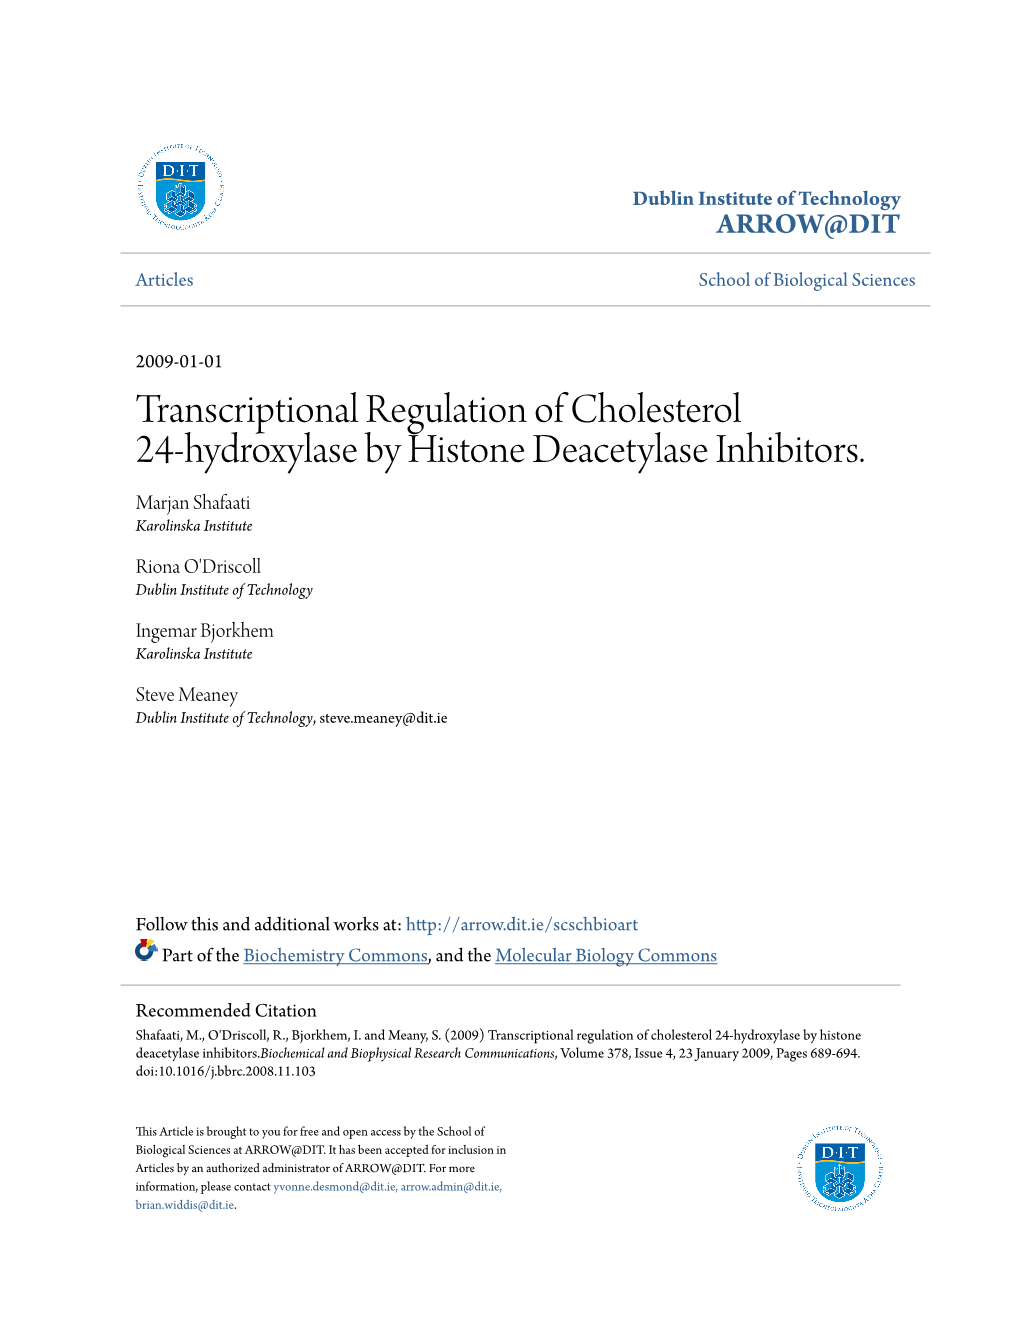 Transcriptional Regulation of Cholesterol 24-Hydroxylase by Histone Deacetylase Inhibitors